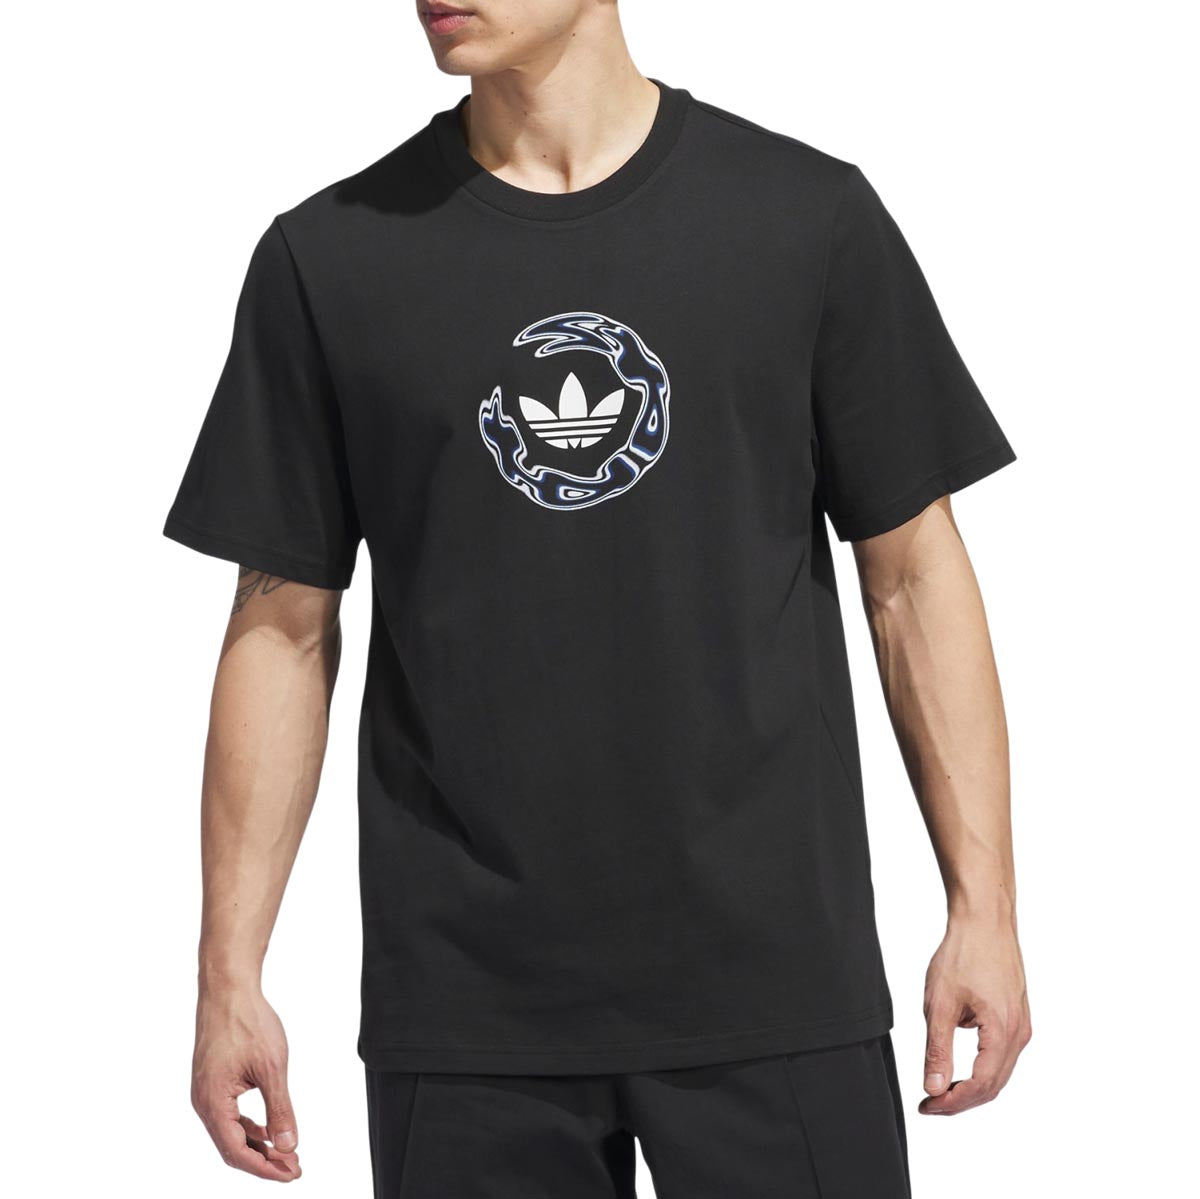 Adidas Skateboarding Wide Angle T-Shirt - Black/Royblu image 2